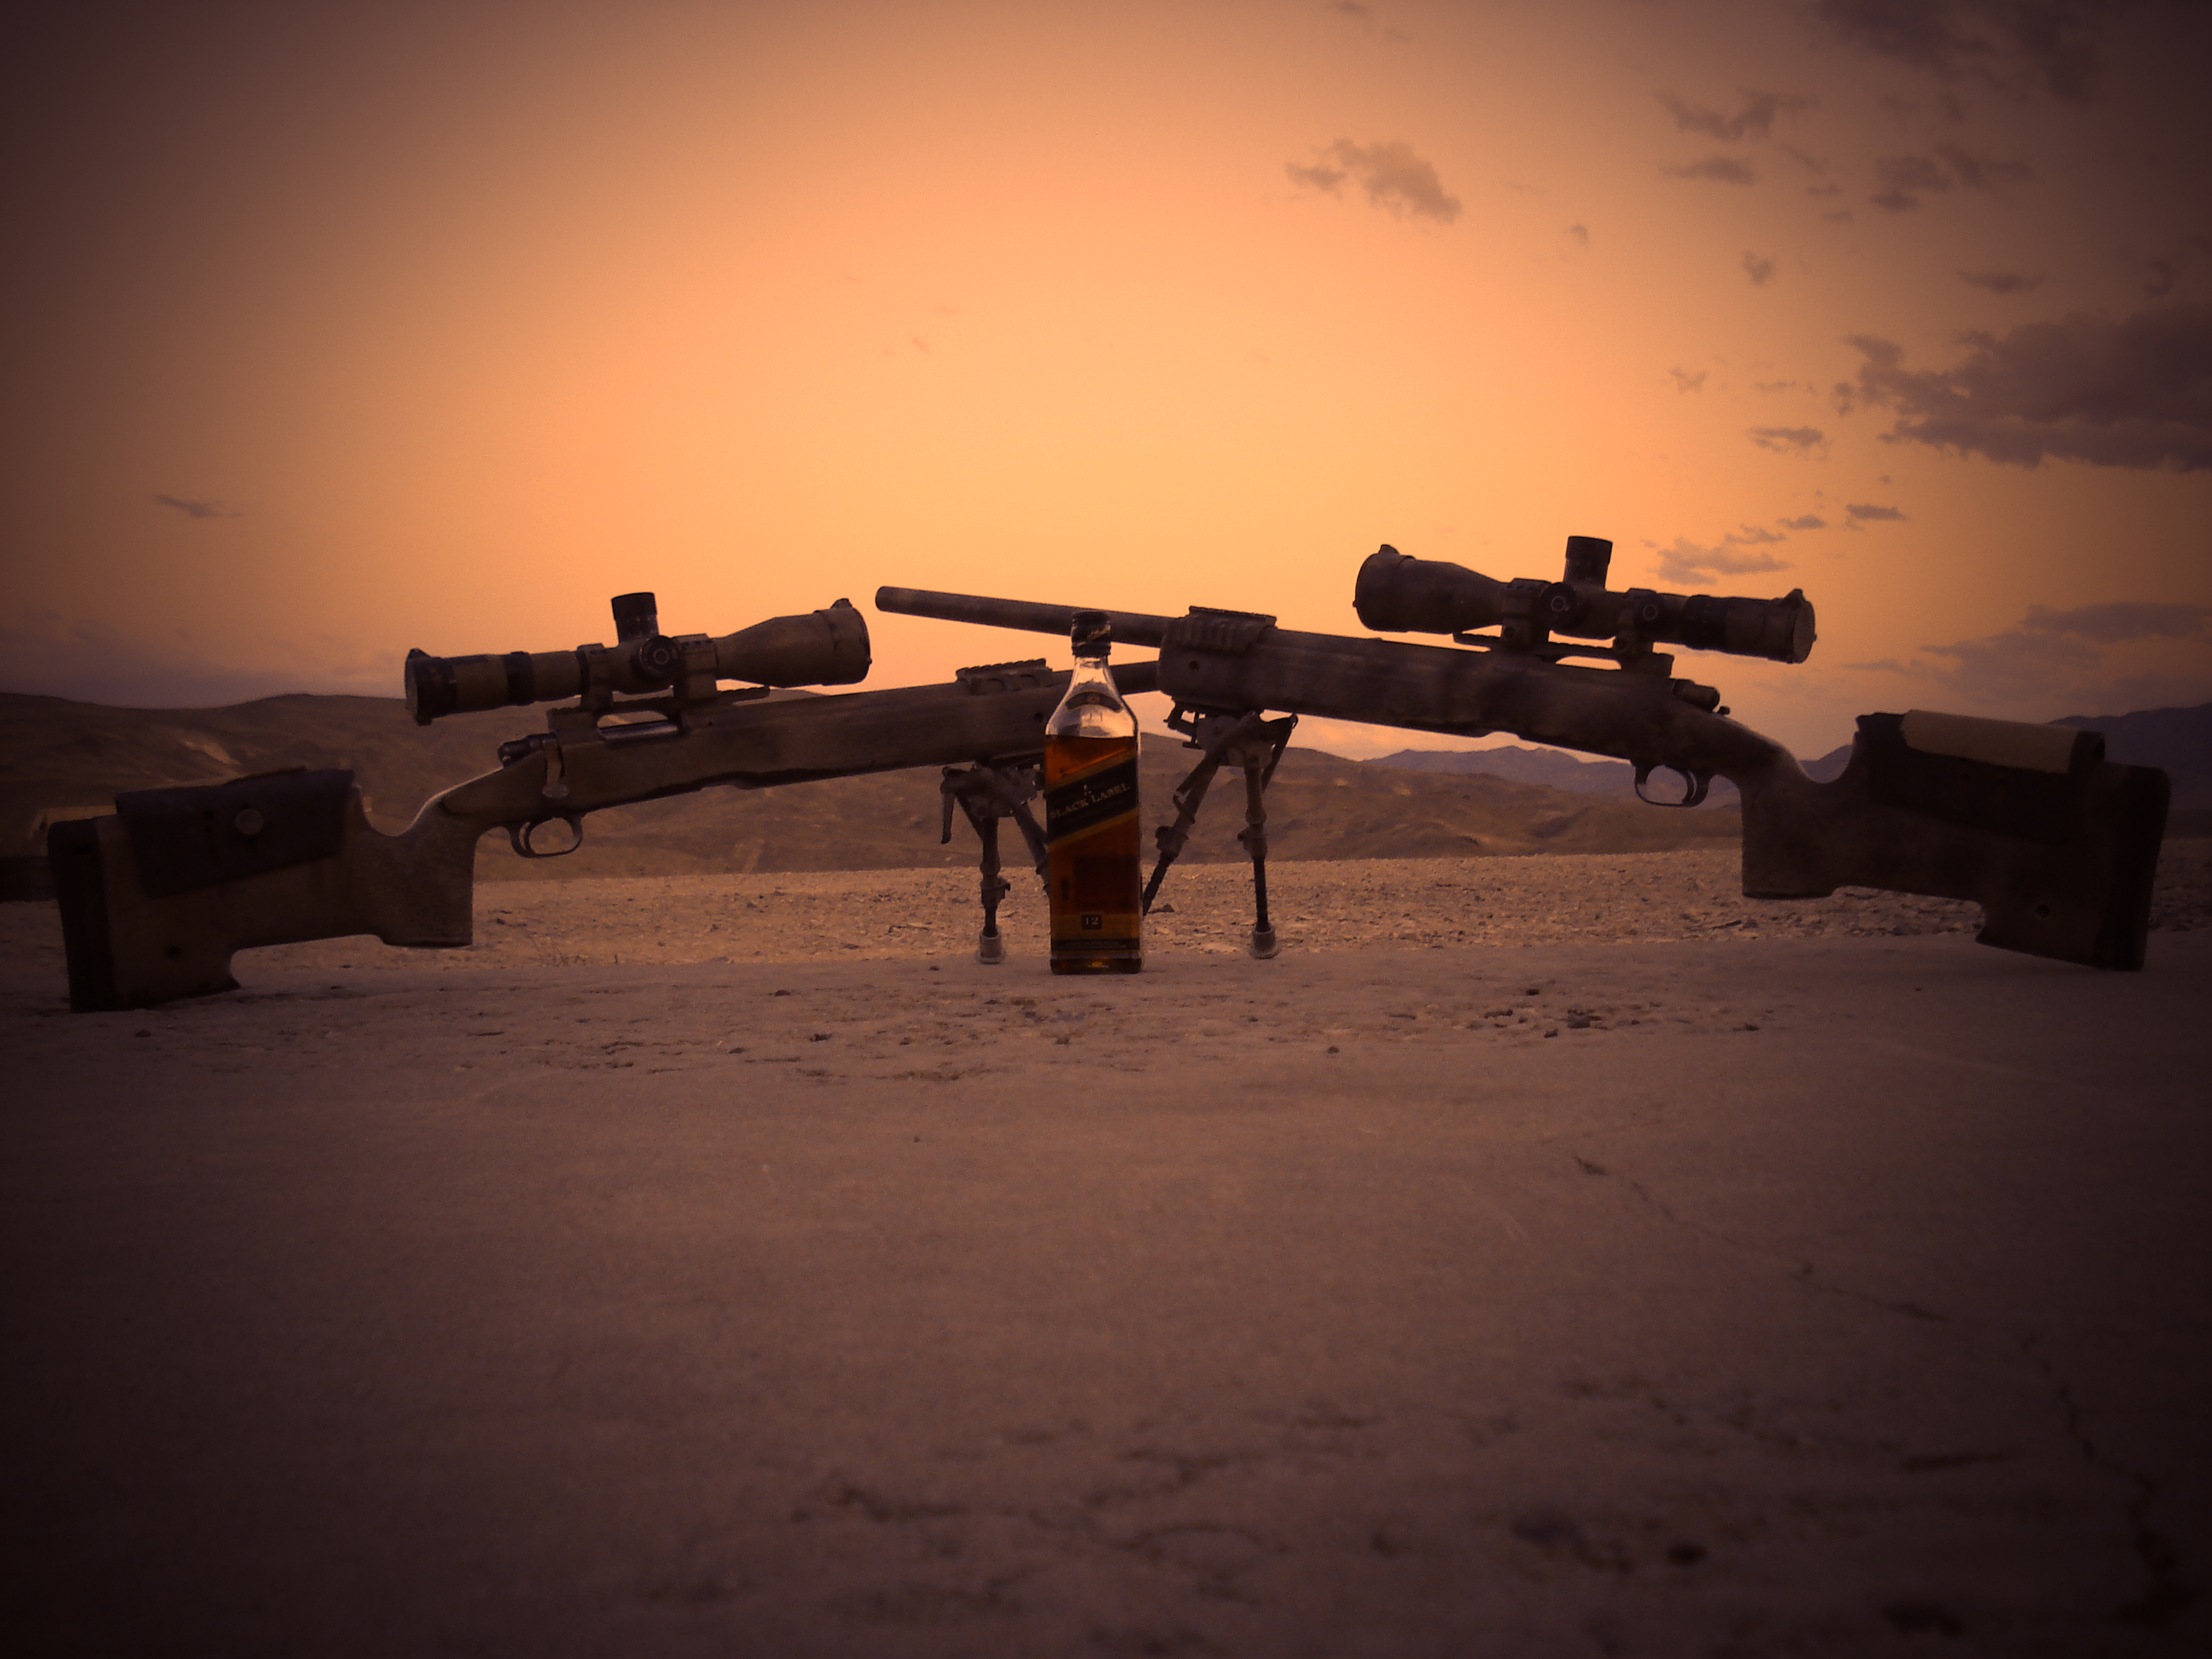 sniper rifle rifles HD Wallpaper   General 533227